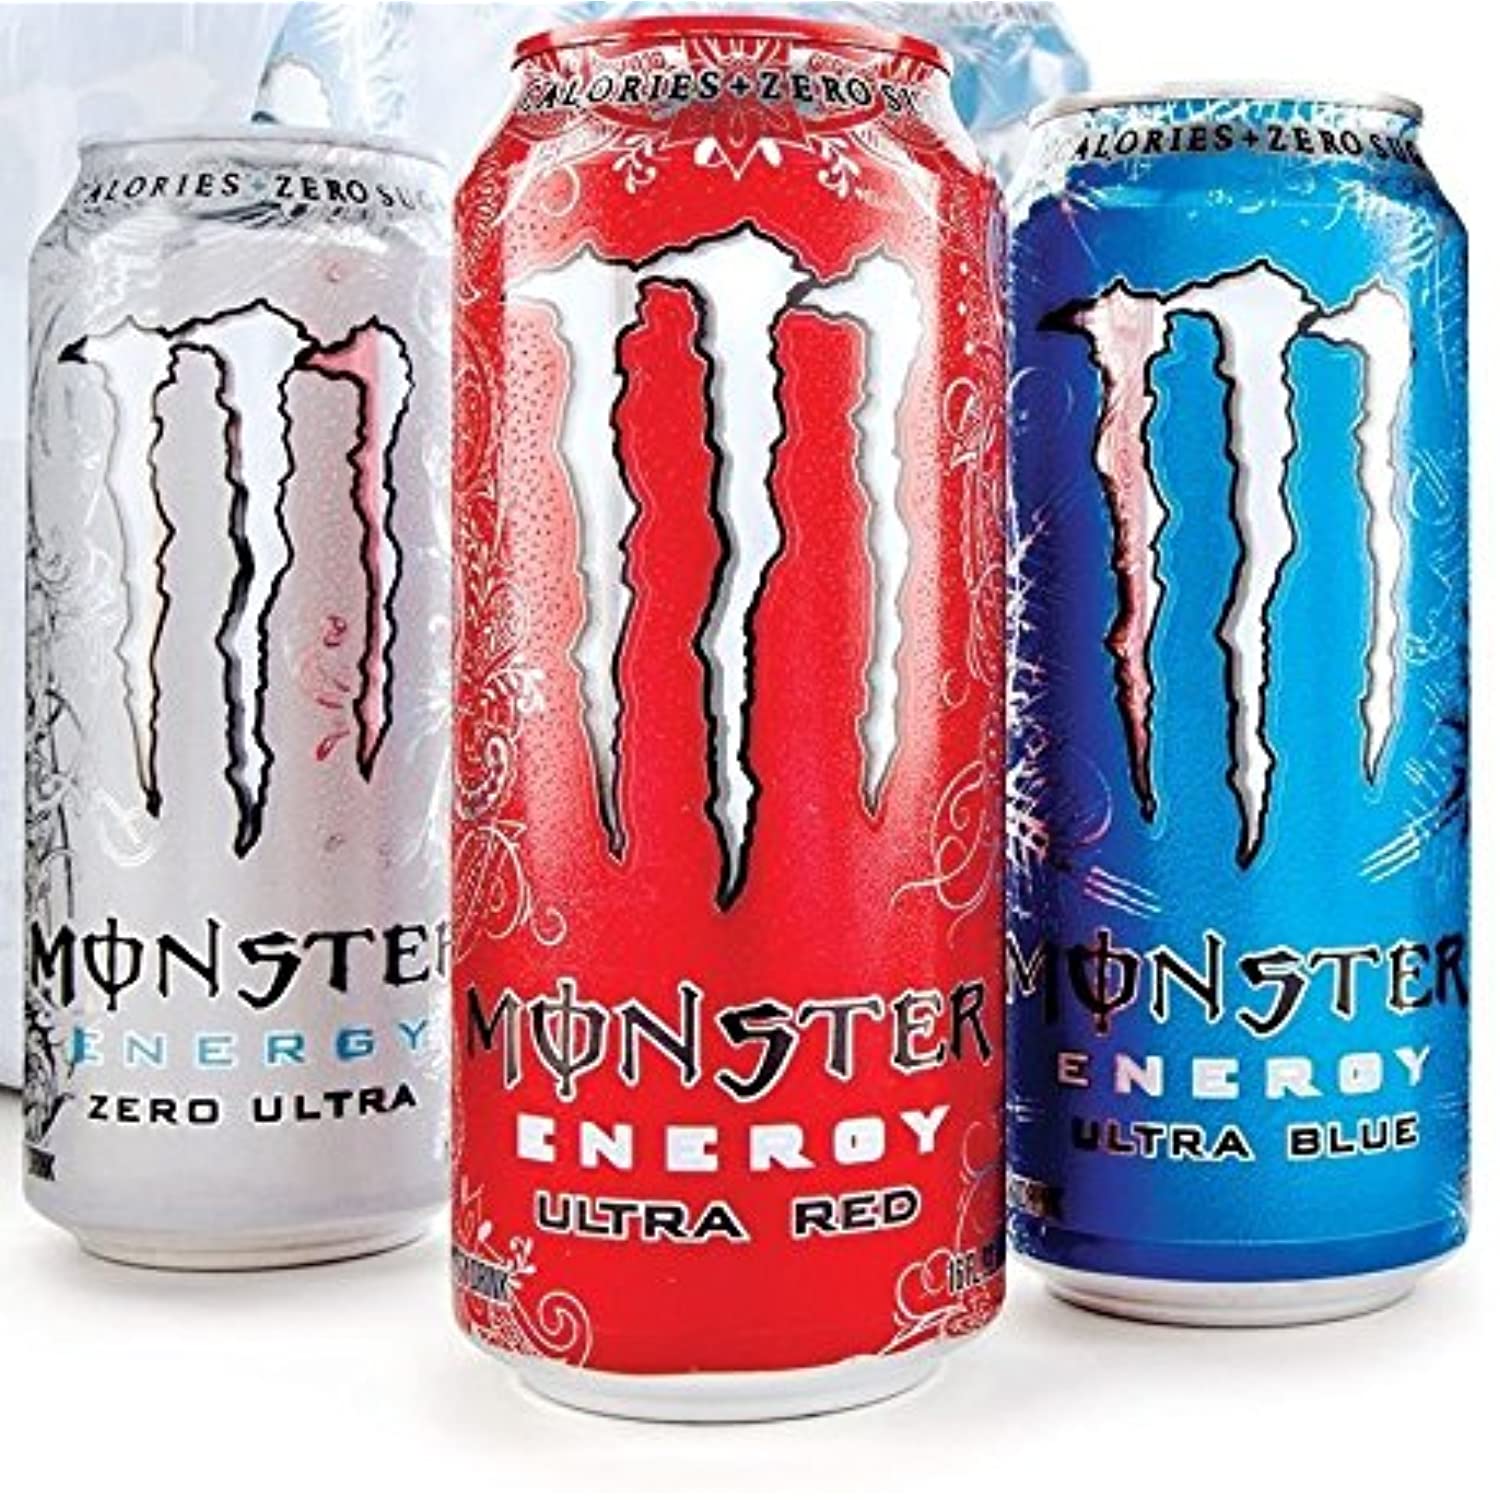 Monster Energy Monster Ultra Variety Pack, 12 Count - image 1 of 2